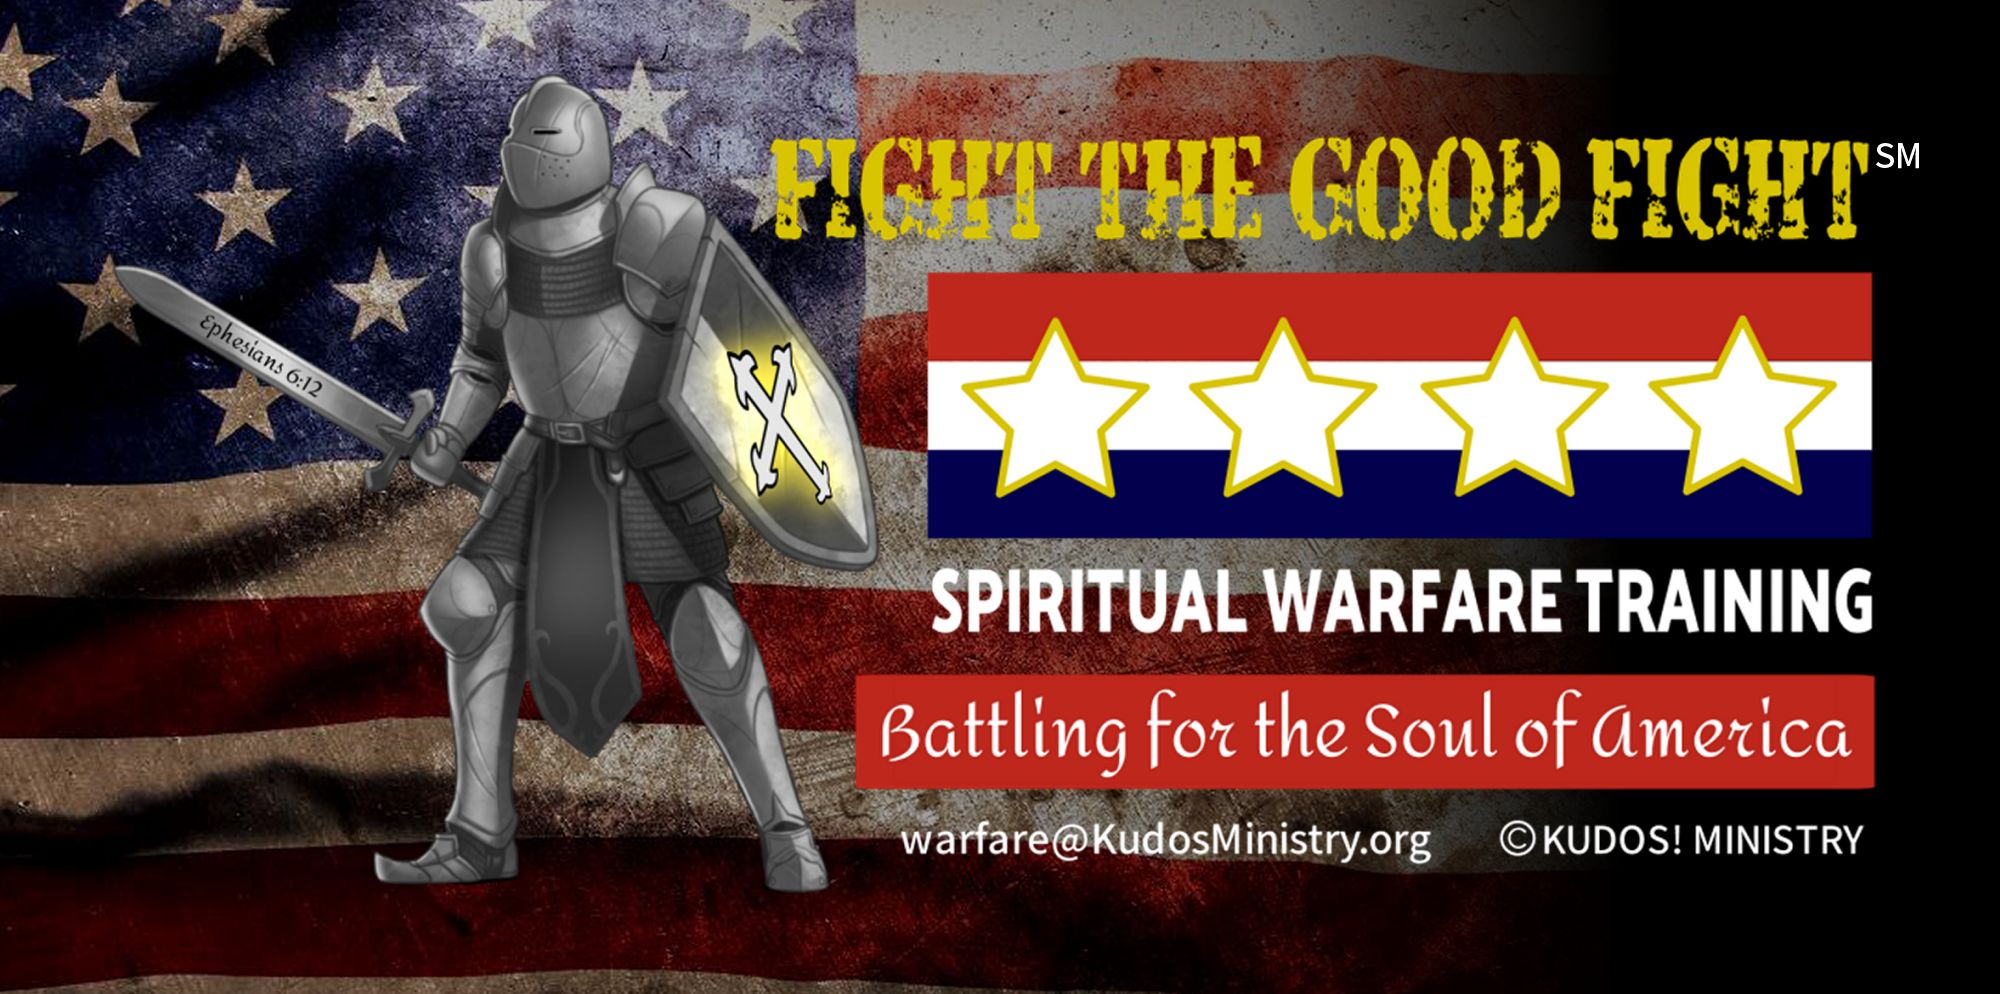 Kudos! Ministry Spiritual Warfare Training